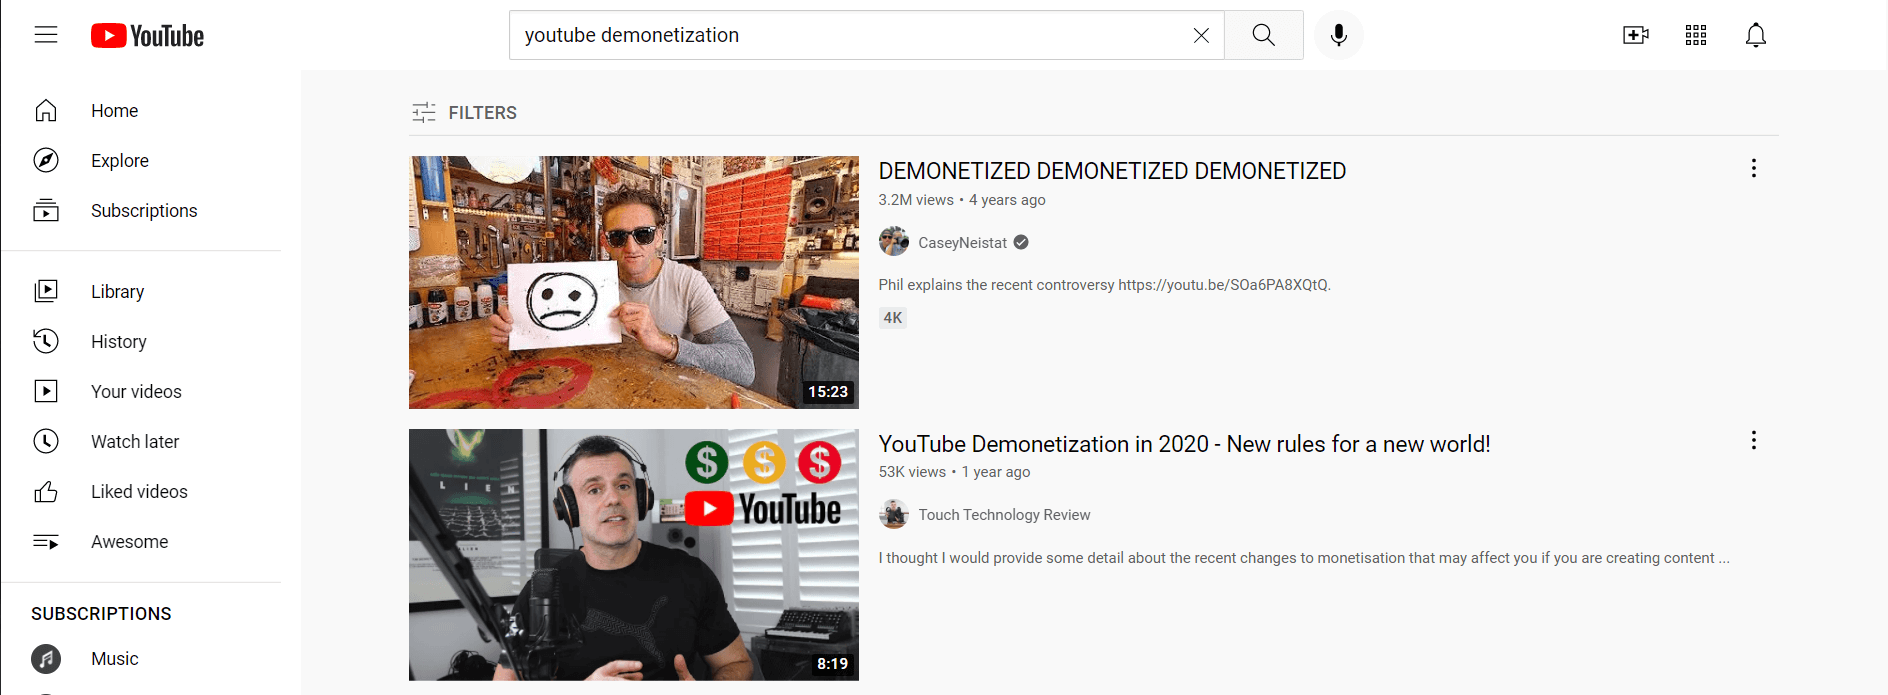 YouTube videos on demonetization